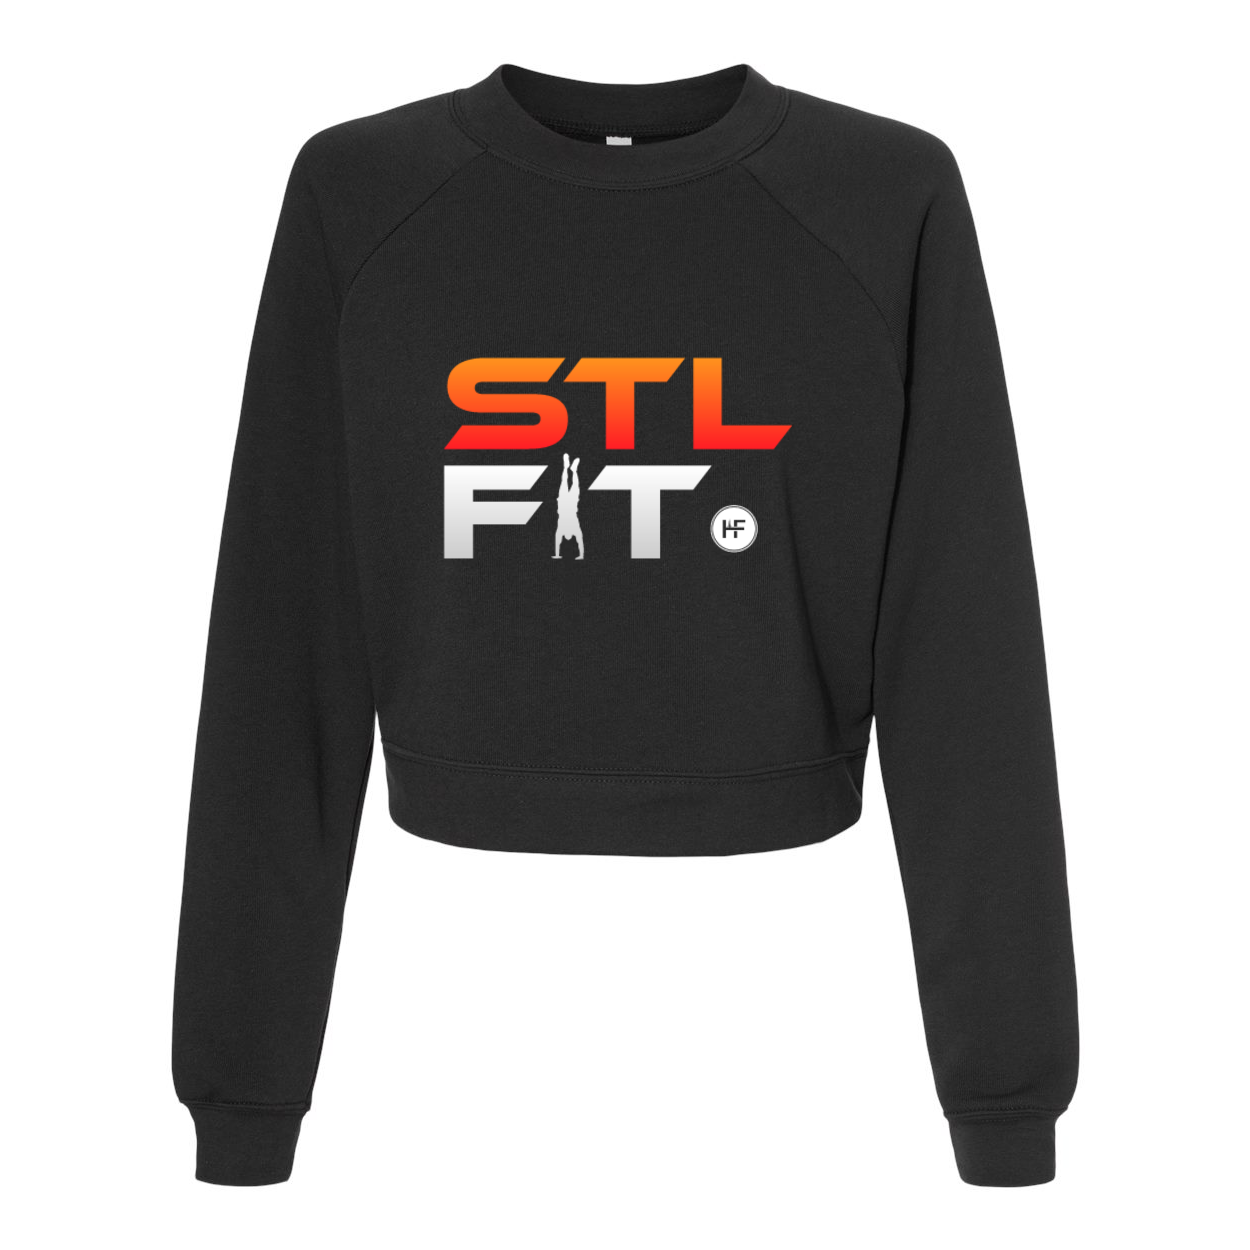 STL FIT Ladies Raglan Pullover Fleece Sweatshirt Top